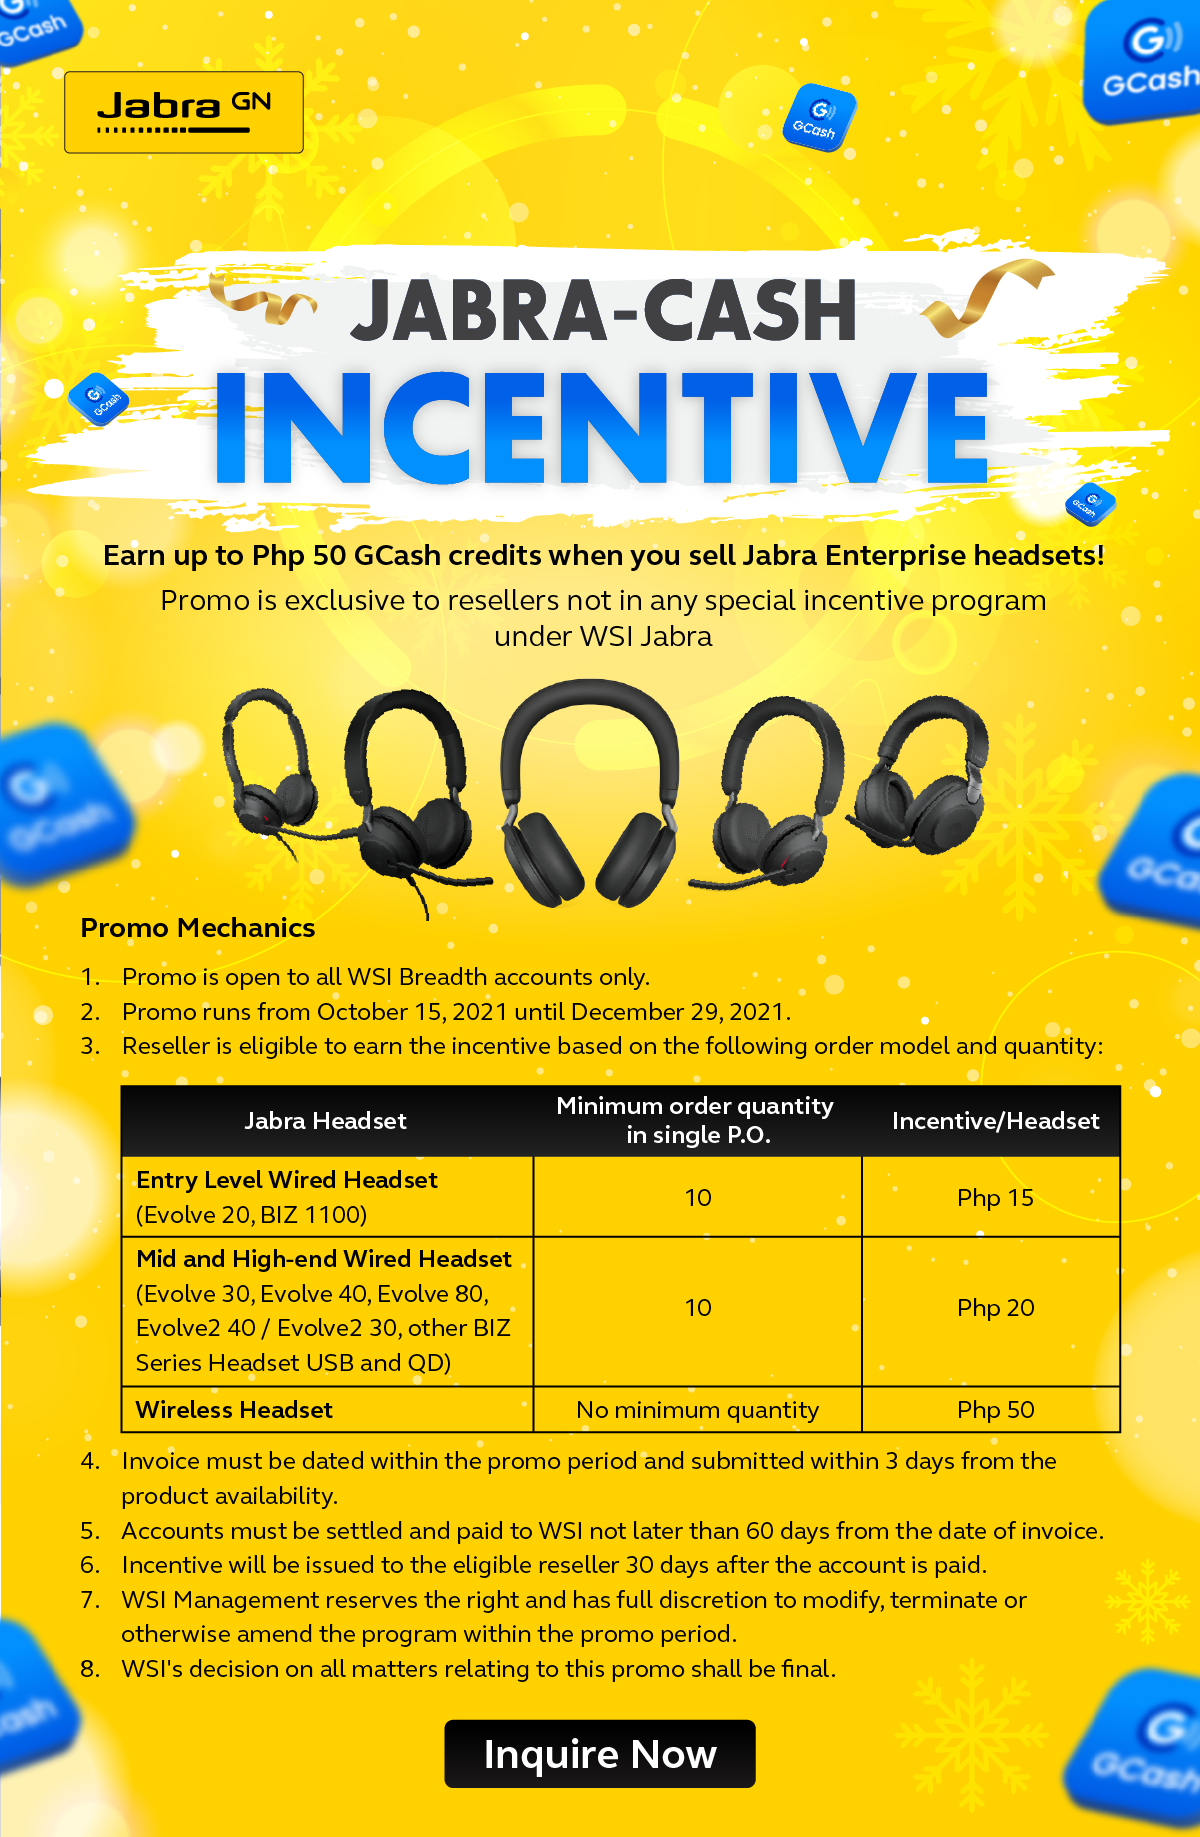 Jabra Enterprise Incentive Program Landing Page